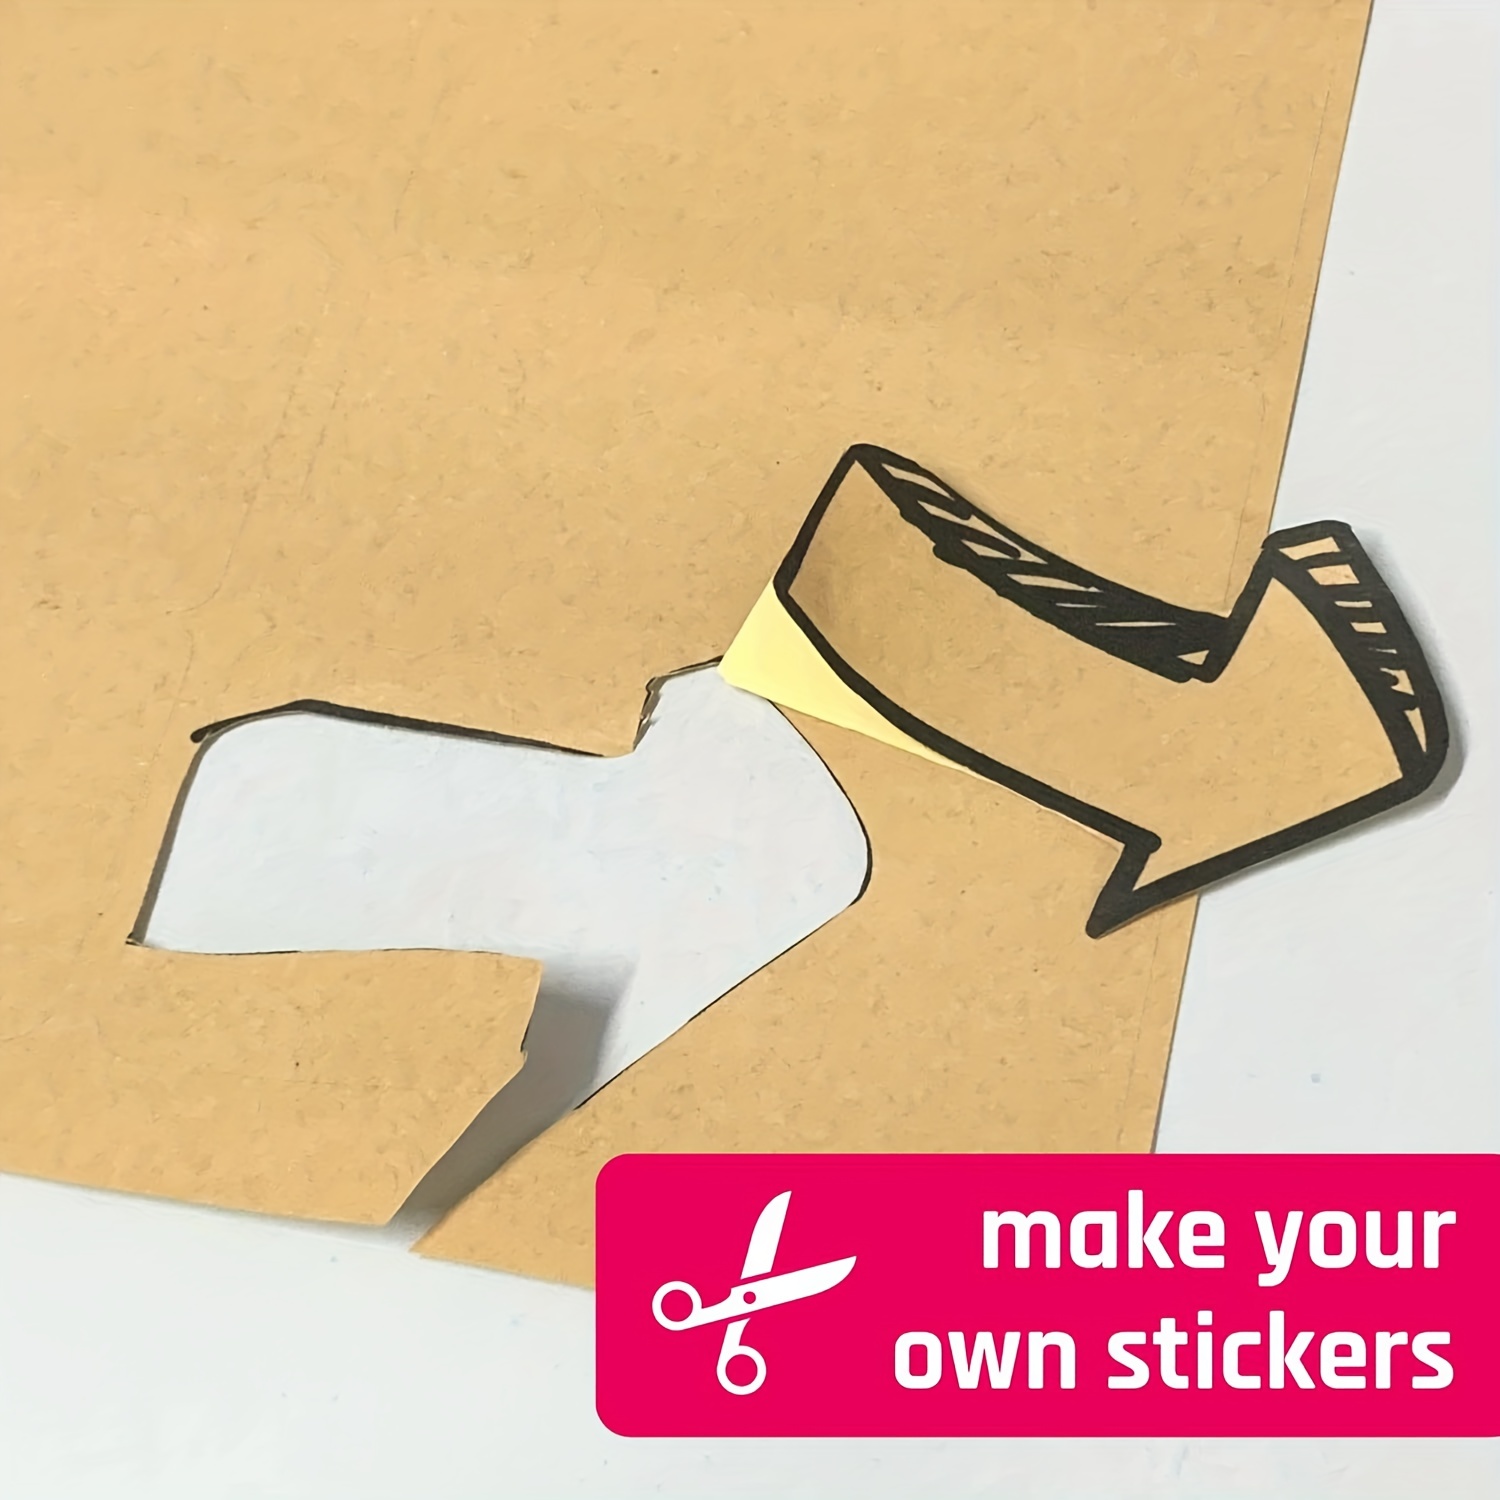 Label Sticker Paper, Printable Self-Adhesive